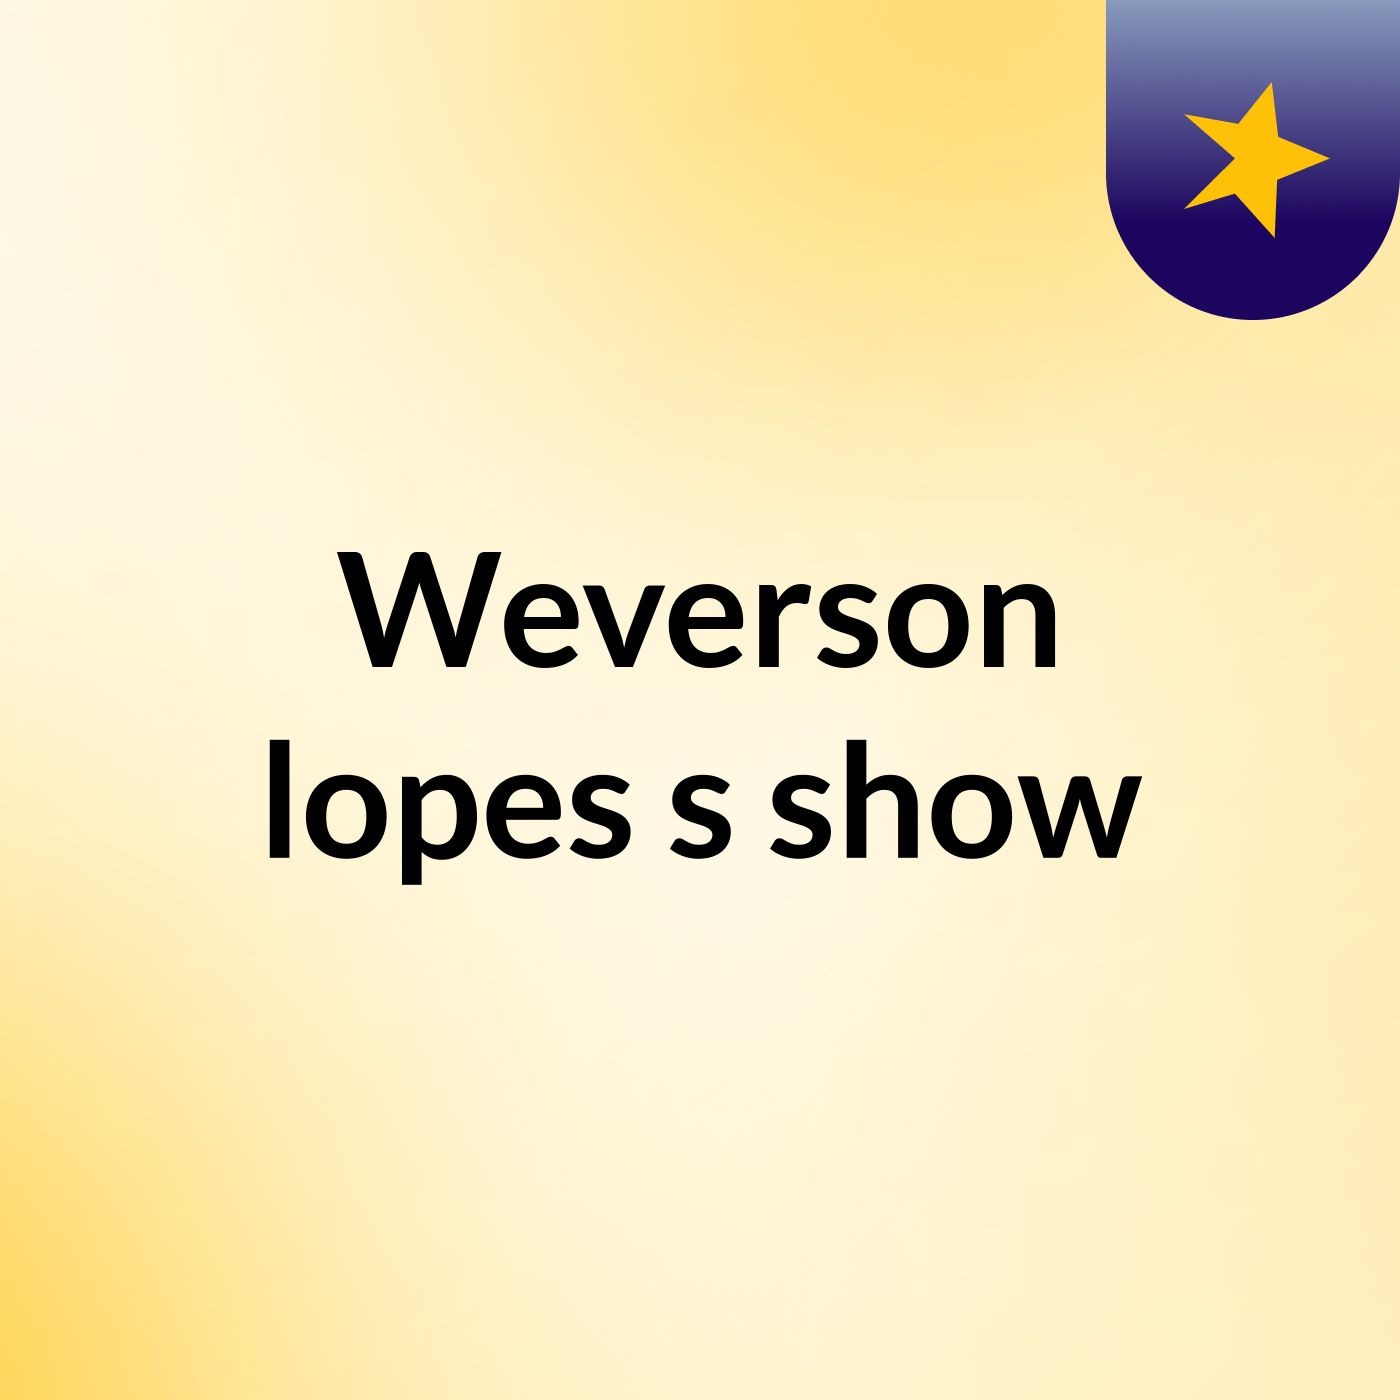 Weverson lopes's show